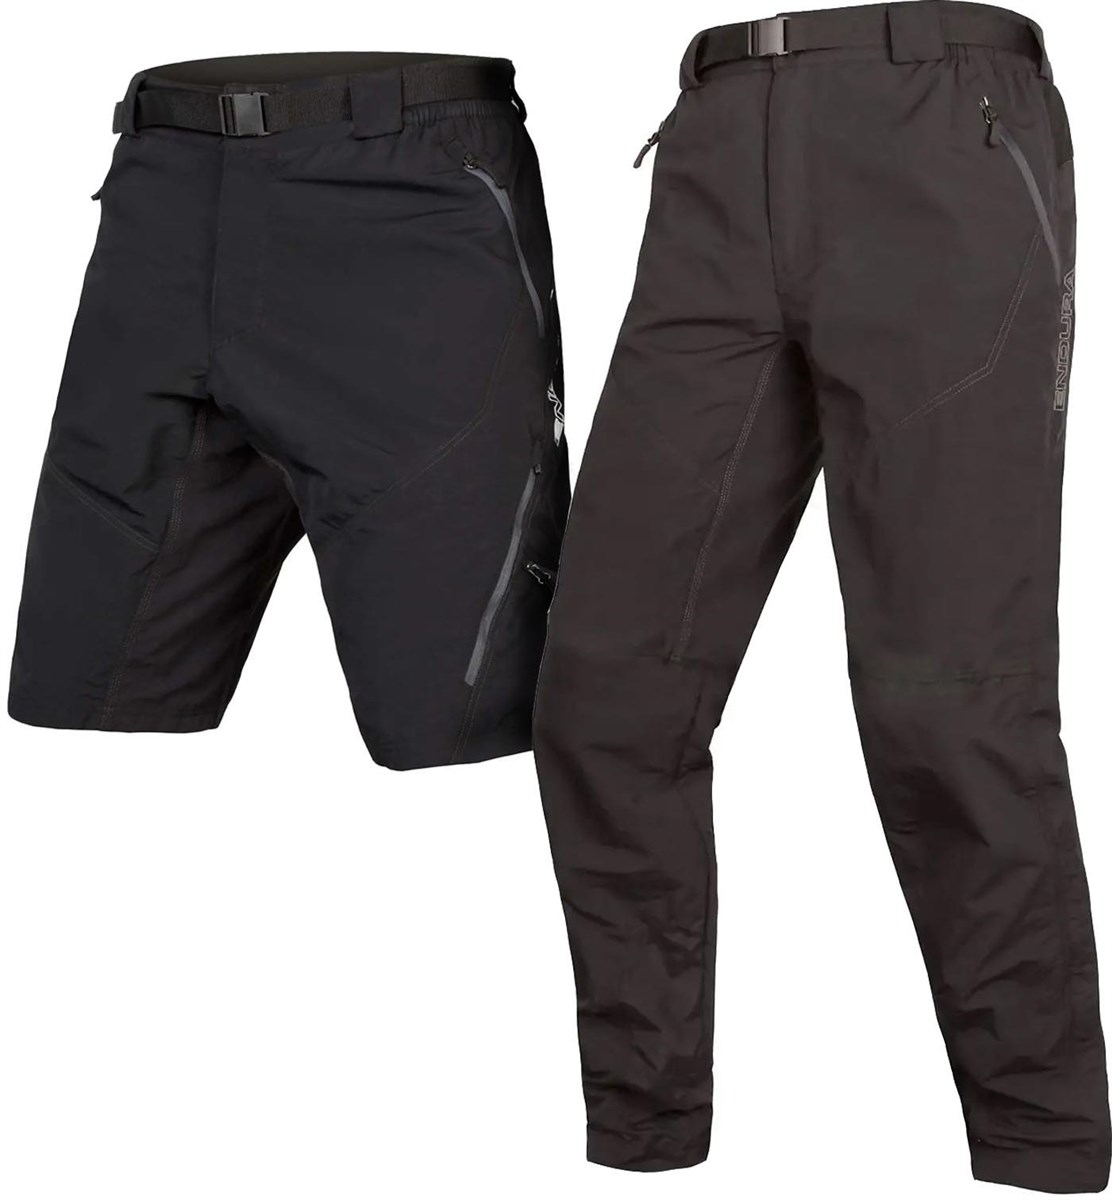 Endura Hummvee II Trouser and Shorts Set product image